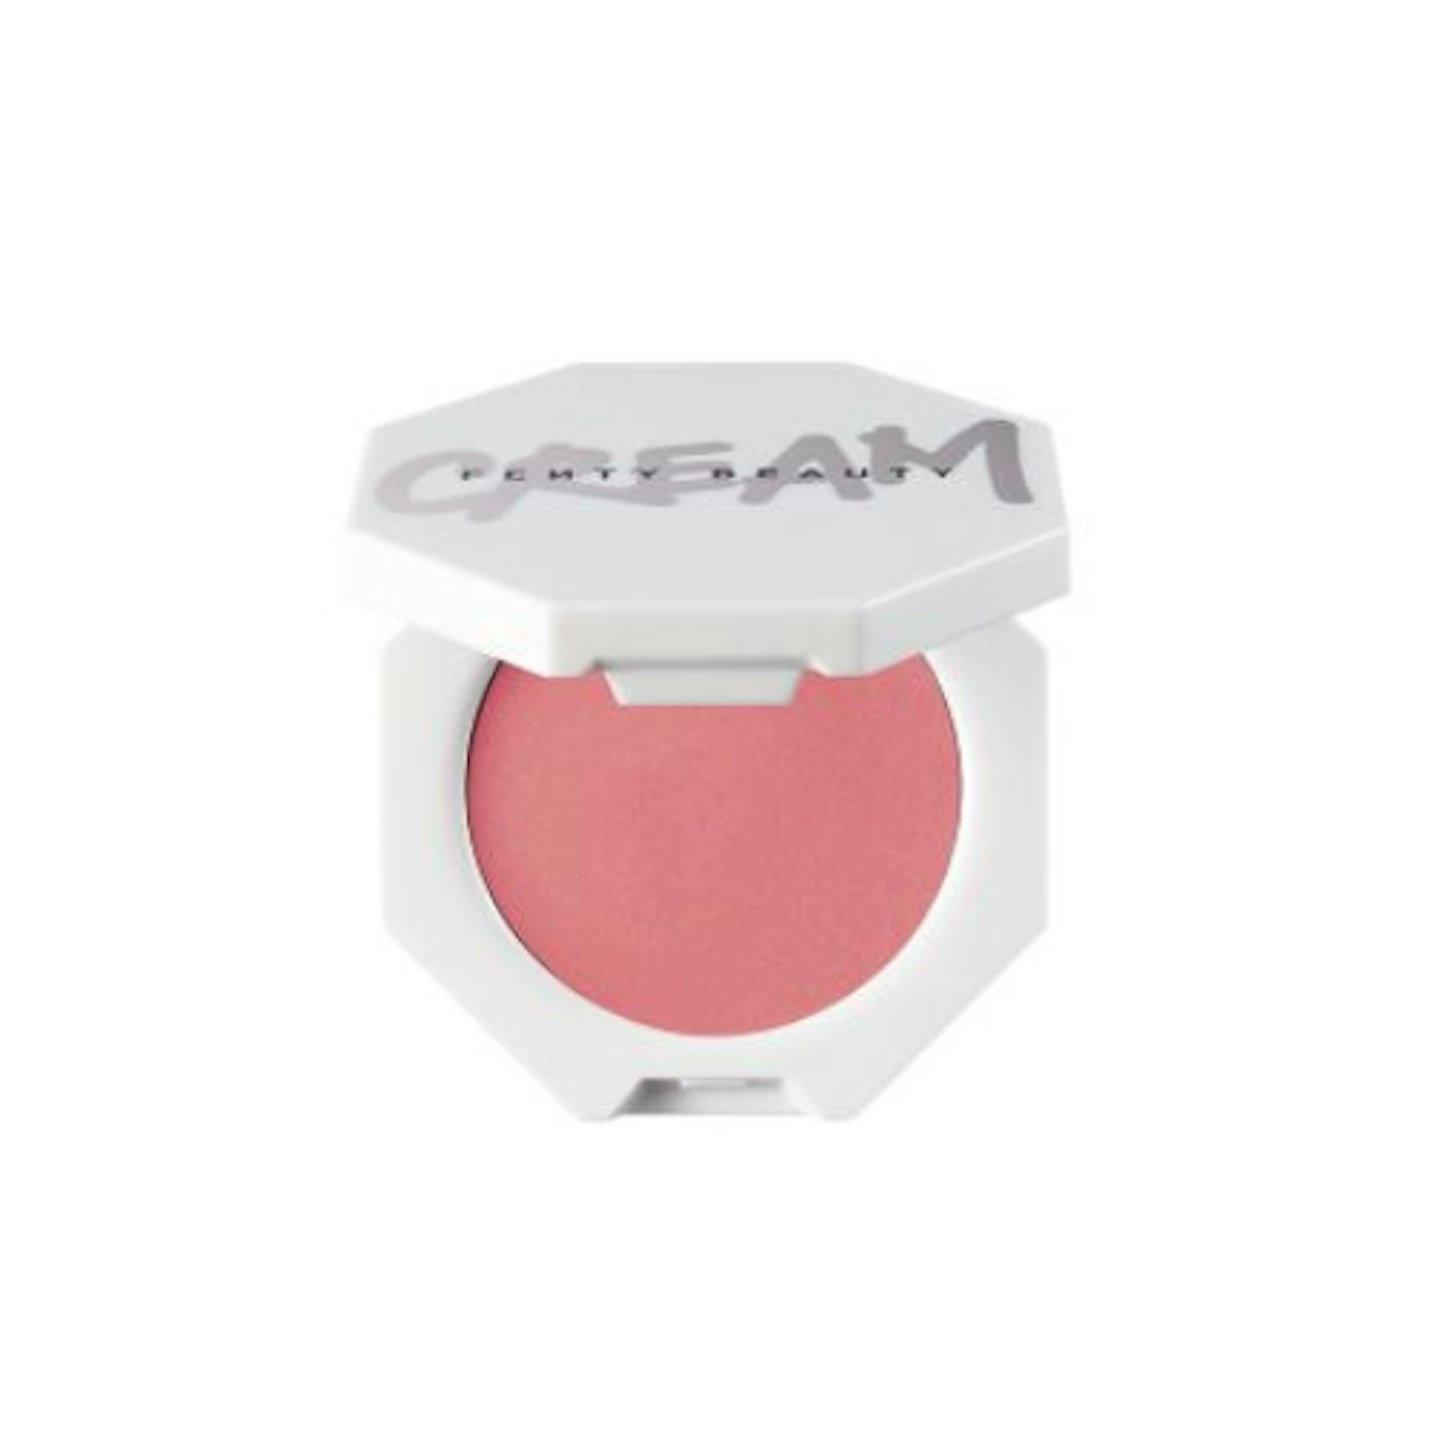 Fenty Beauty Cheeks Out Freestyle Cream Blush